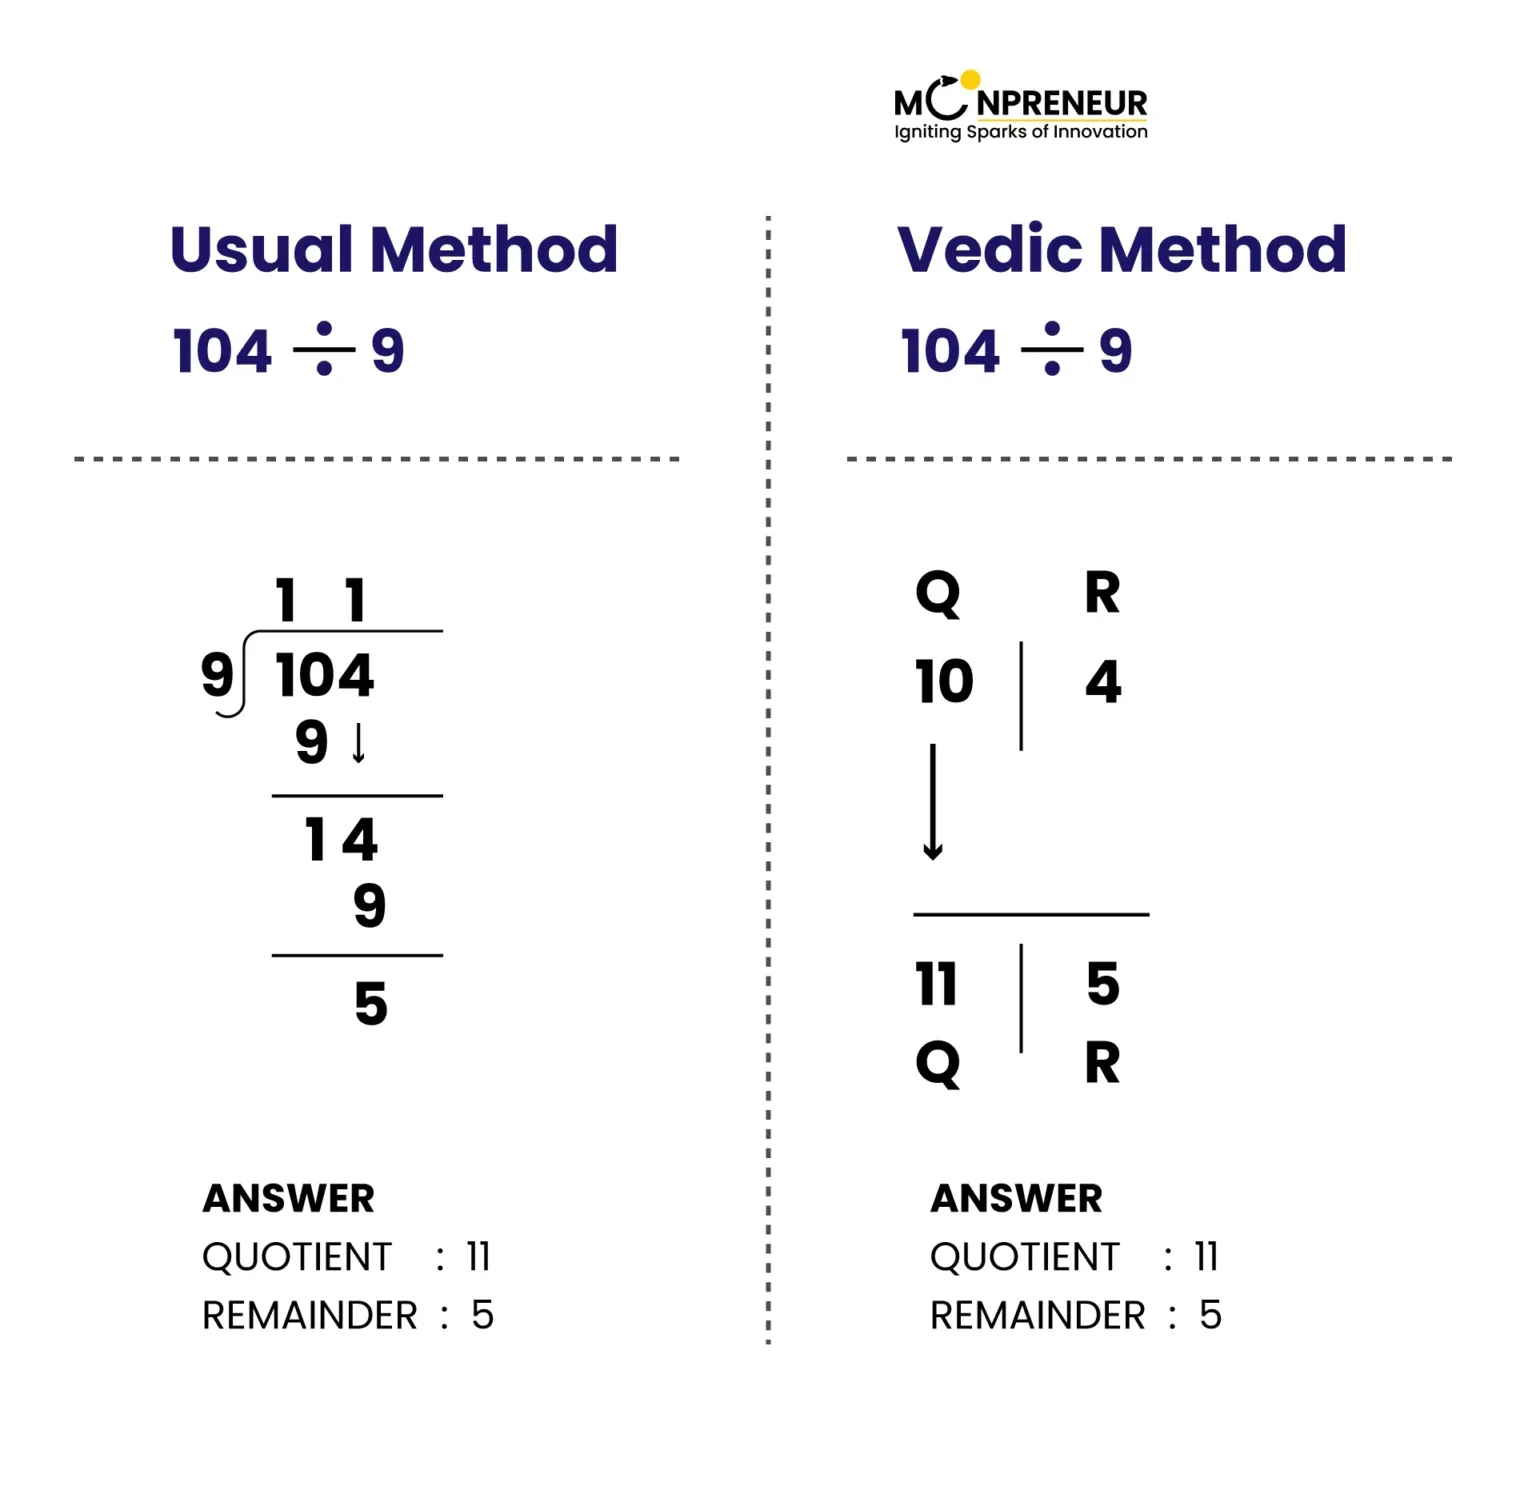 Vedic Method